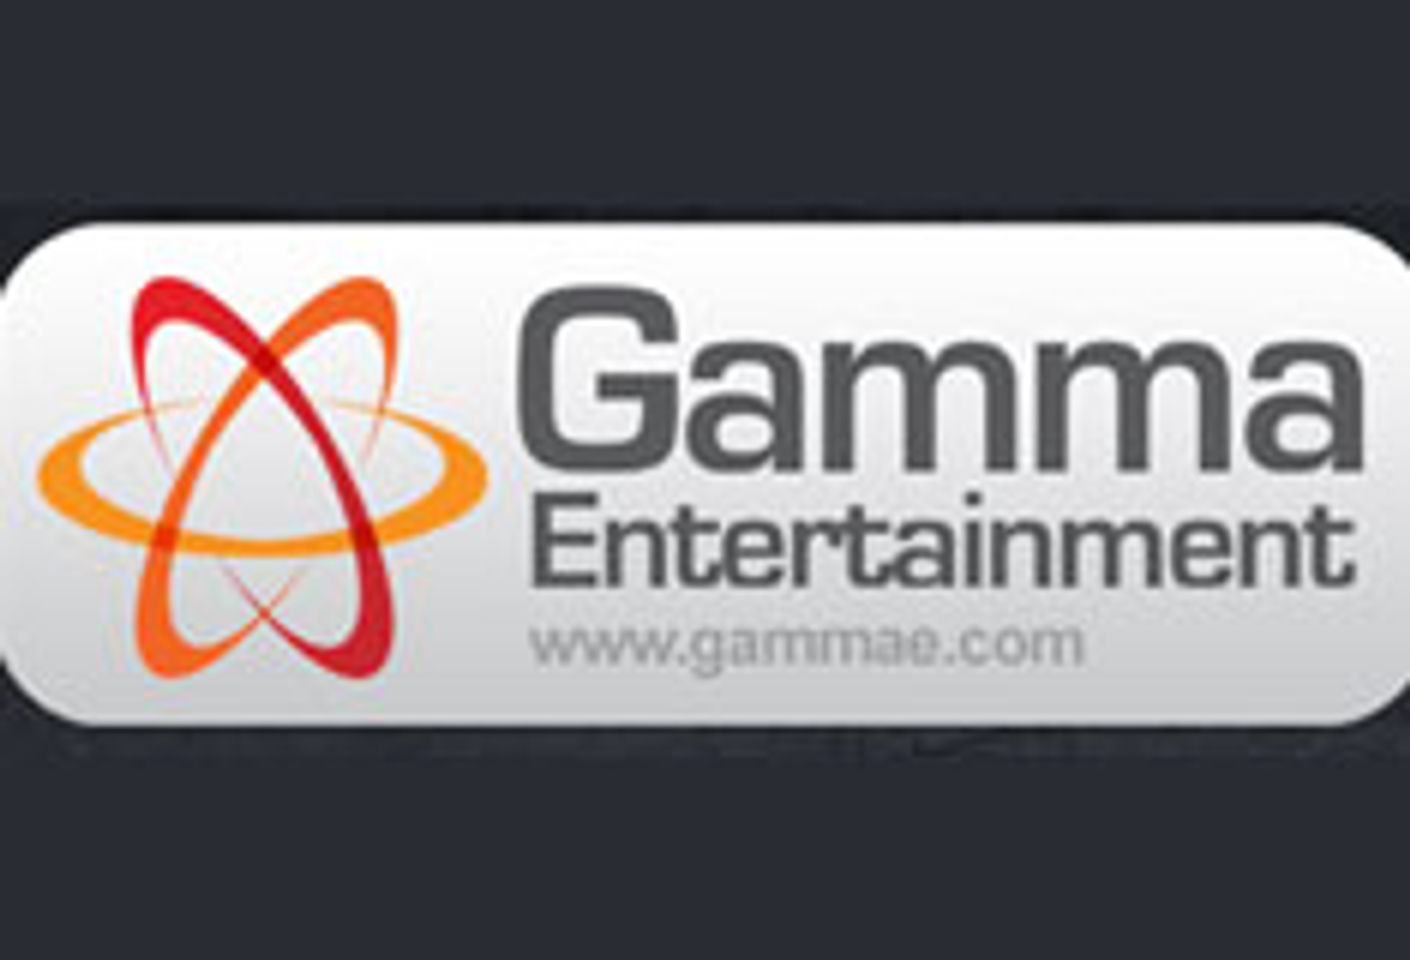 Porno Dan Hosts Exclusive Cam Event on Gamma's Live Network